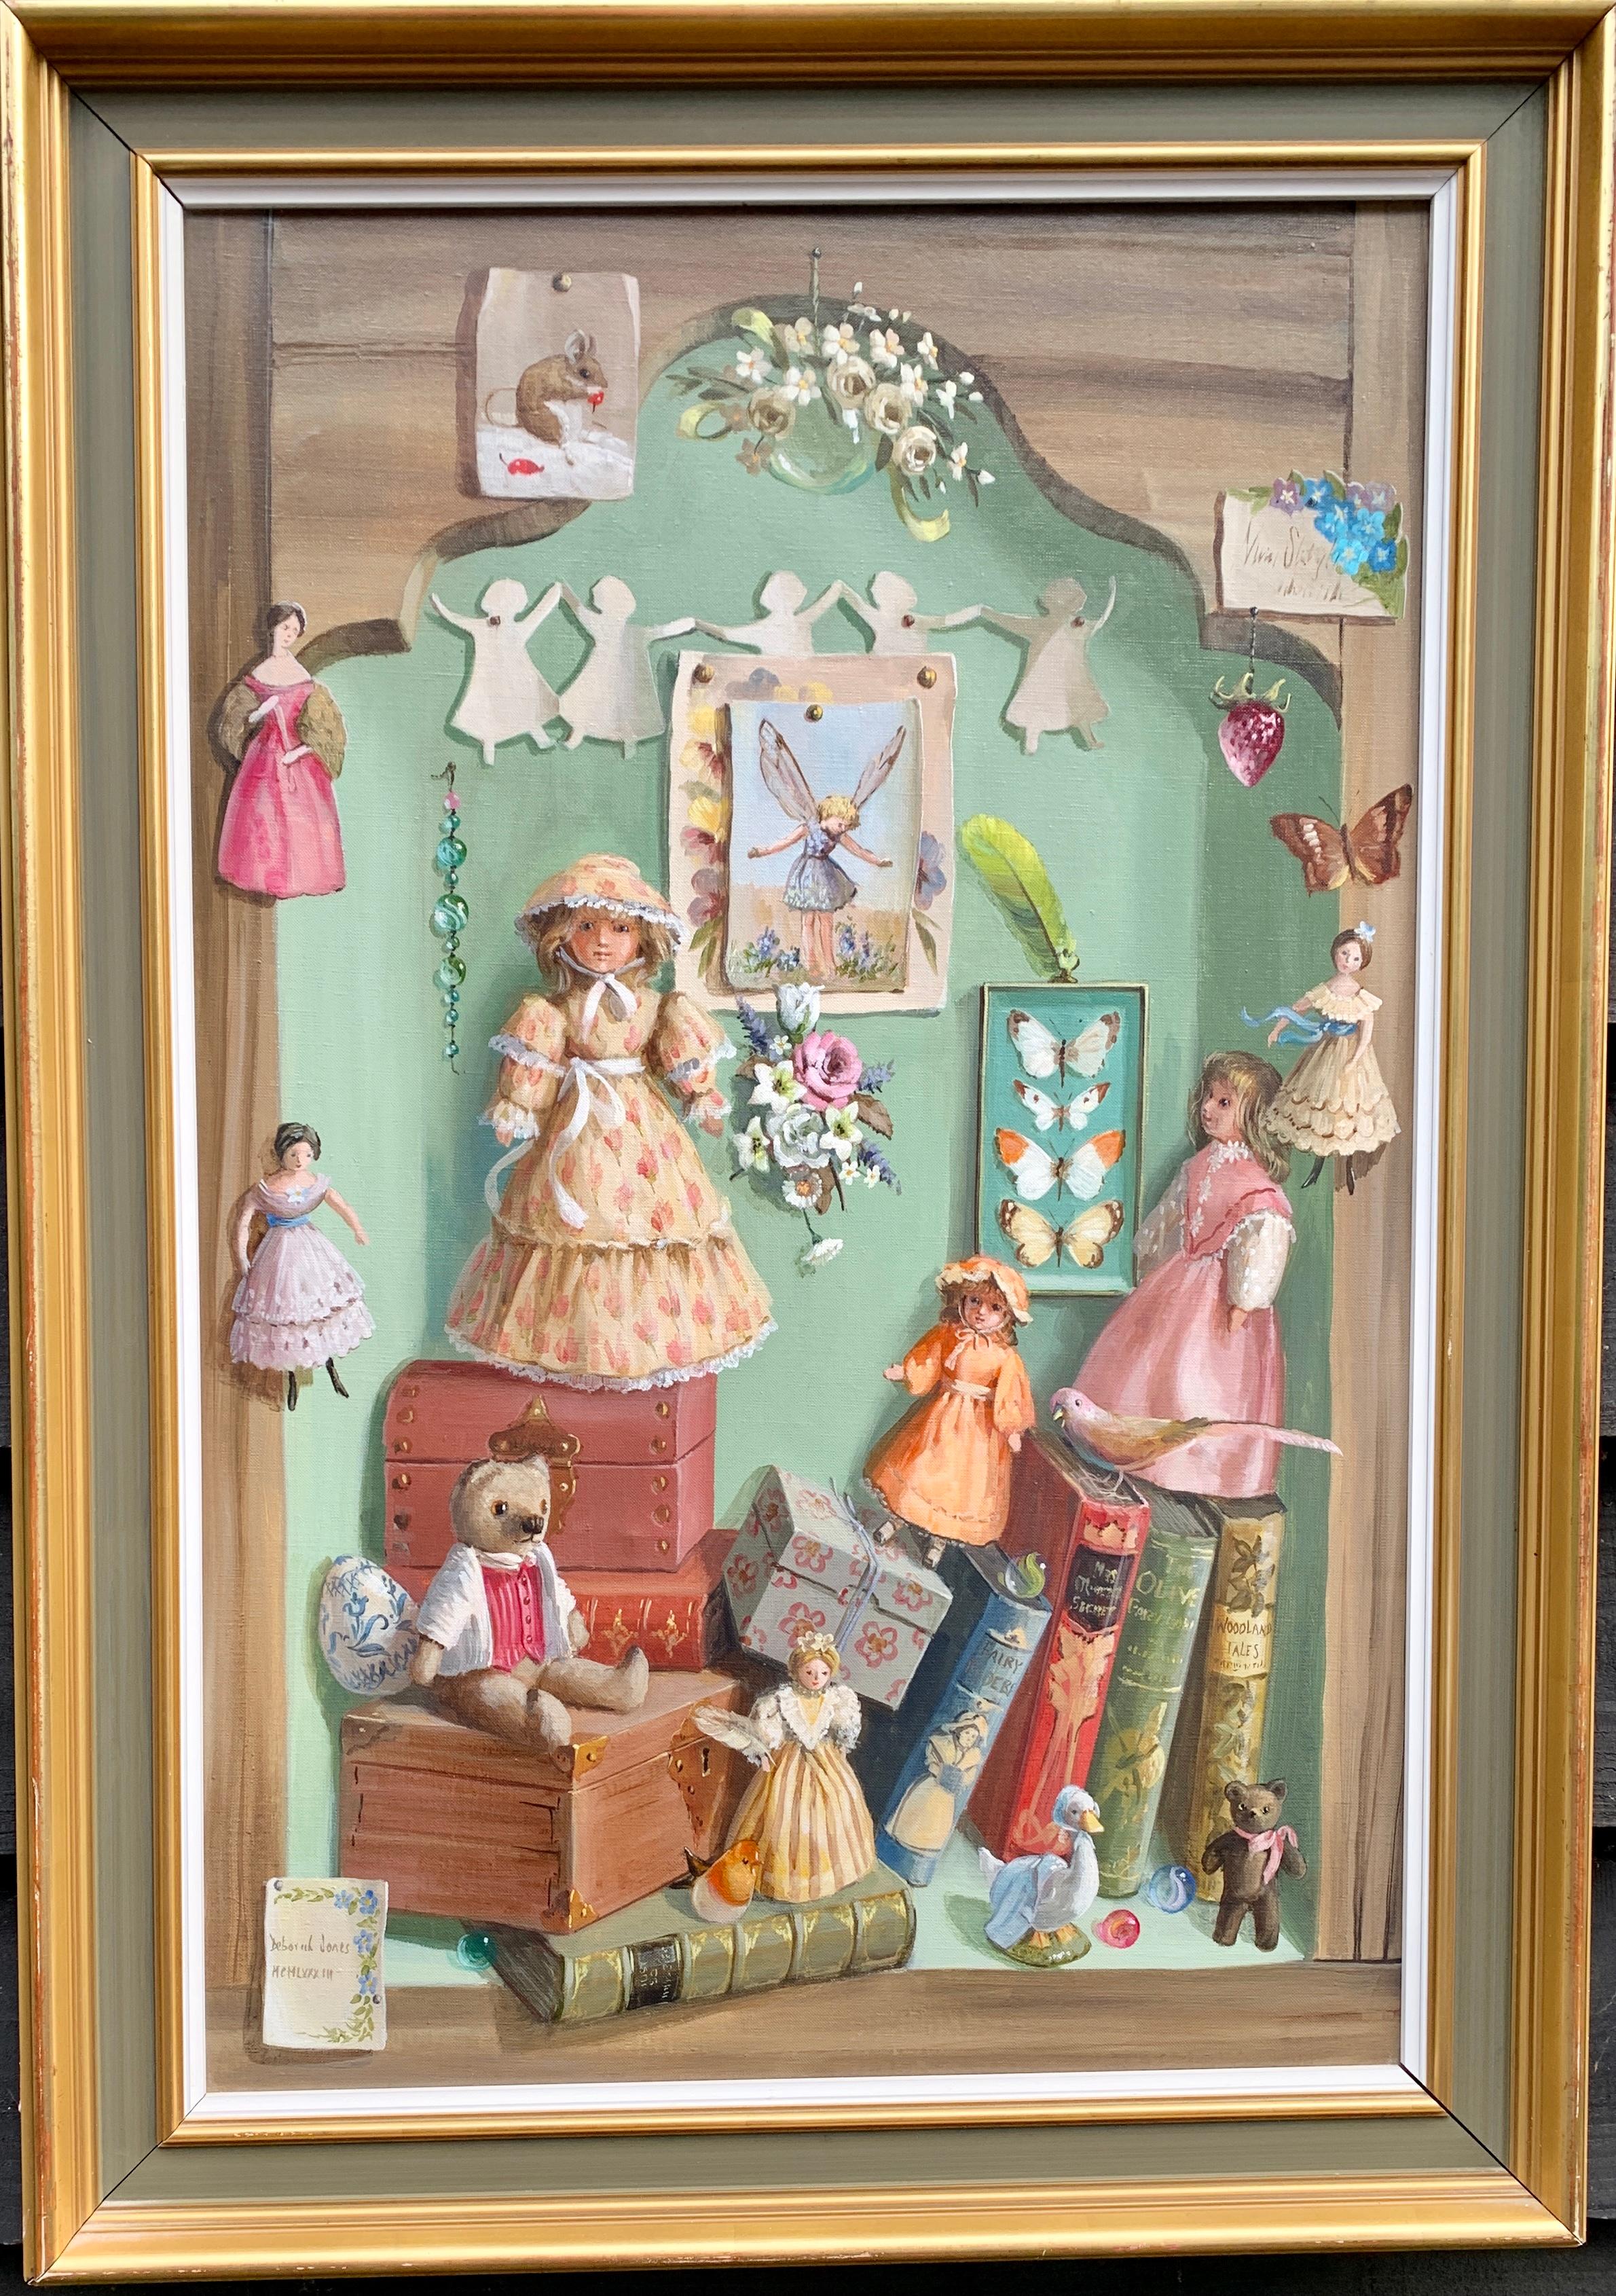 Deborah Jones Figurative Painting - Still life study of treasures,  dolls, shells, teddy , flowers, books, glass.